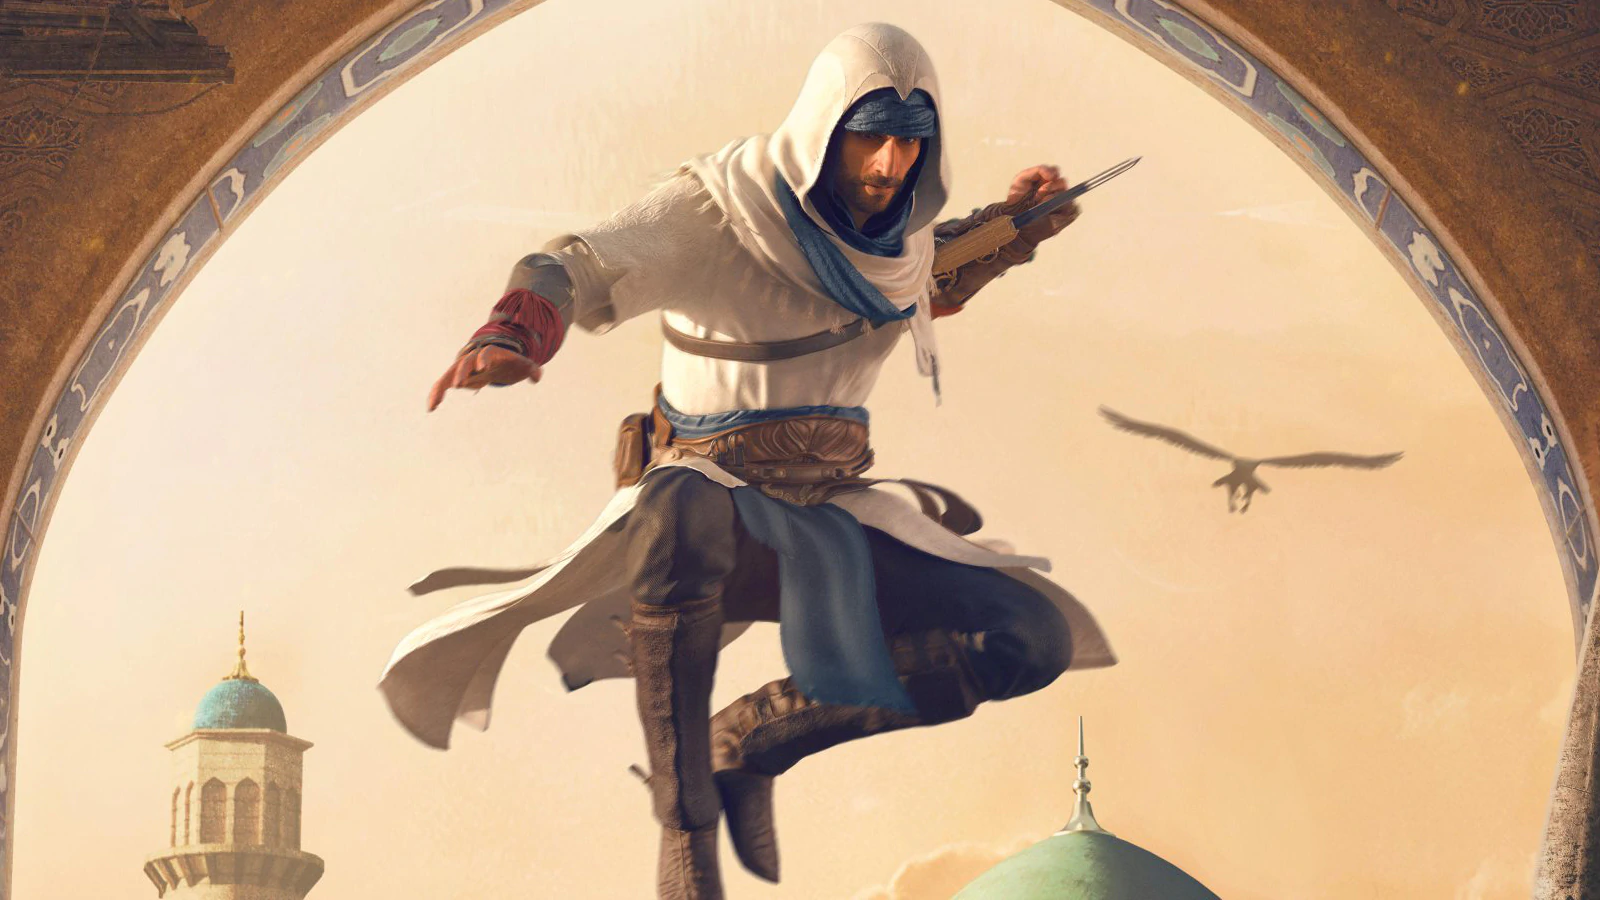 mirage I8wzLTO | Assassin’s Creed Mirage | ไม่ยาวมาก! Assassin’s Creed Mirage ใช้เวลาจบเกมราว ๆ 20-30 ชั่วโมง